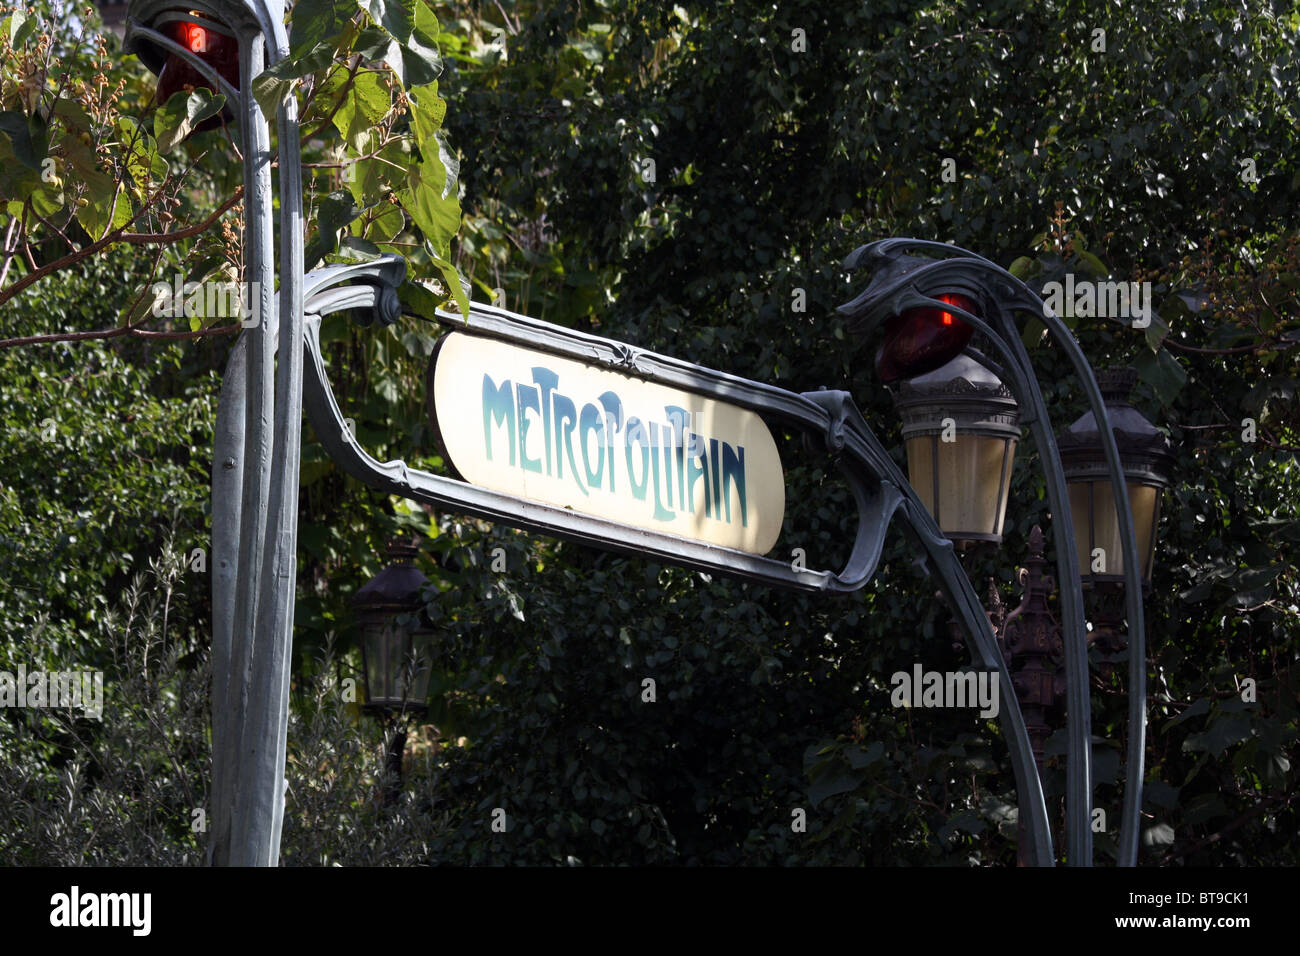 Metroloitain (Métro sign) in Paris Stock Photo